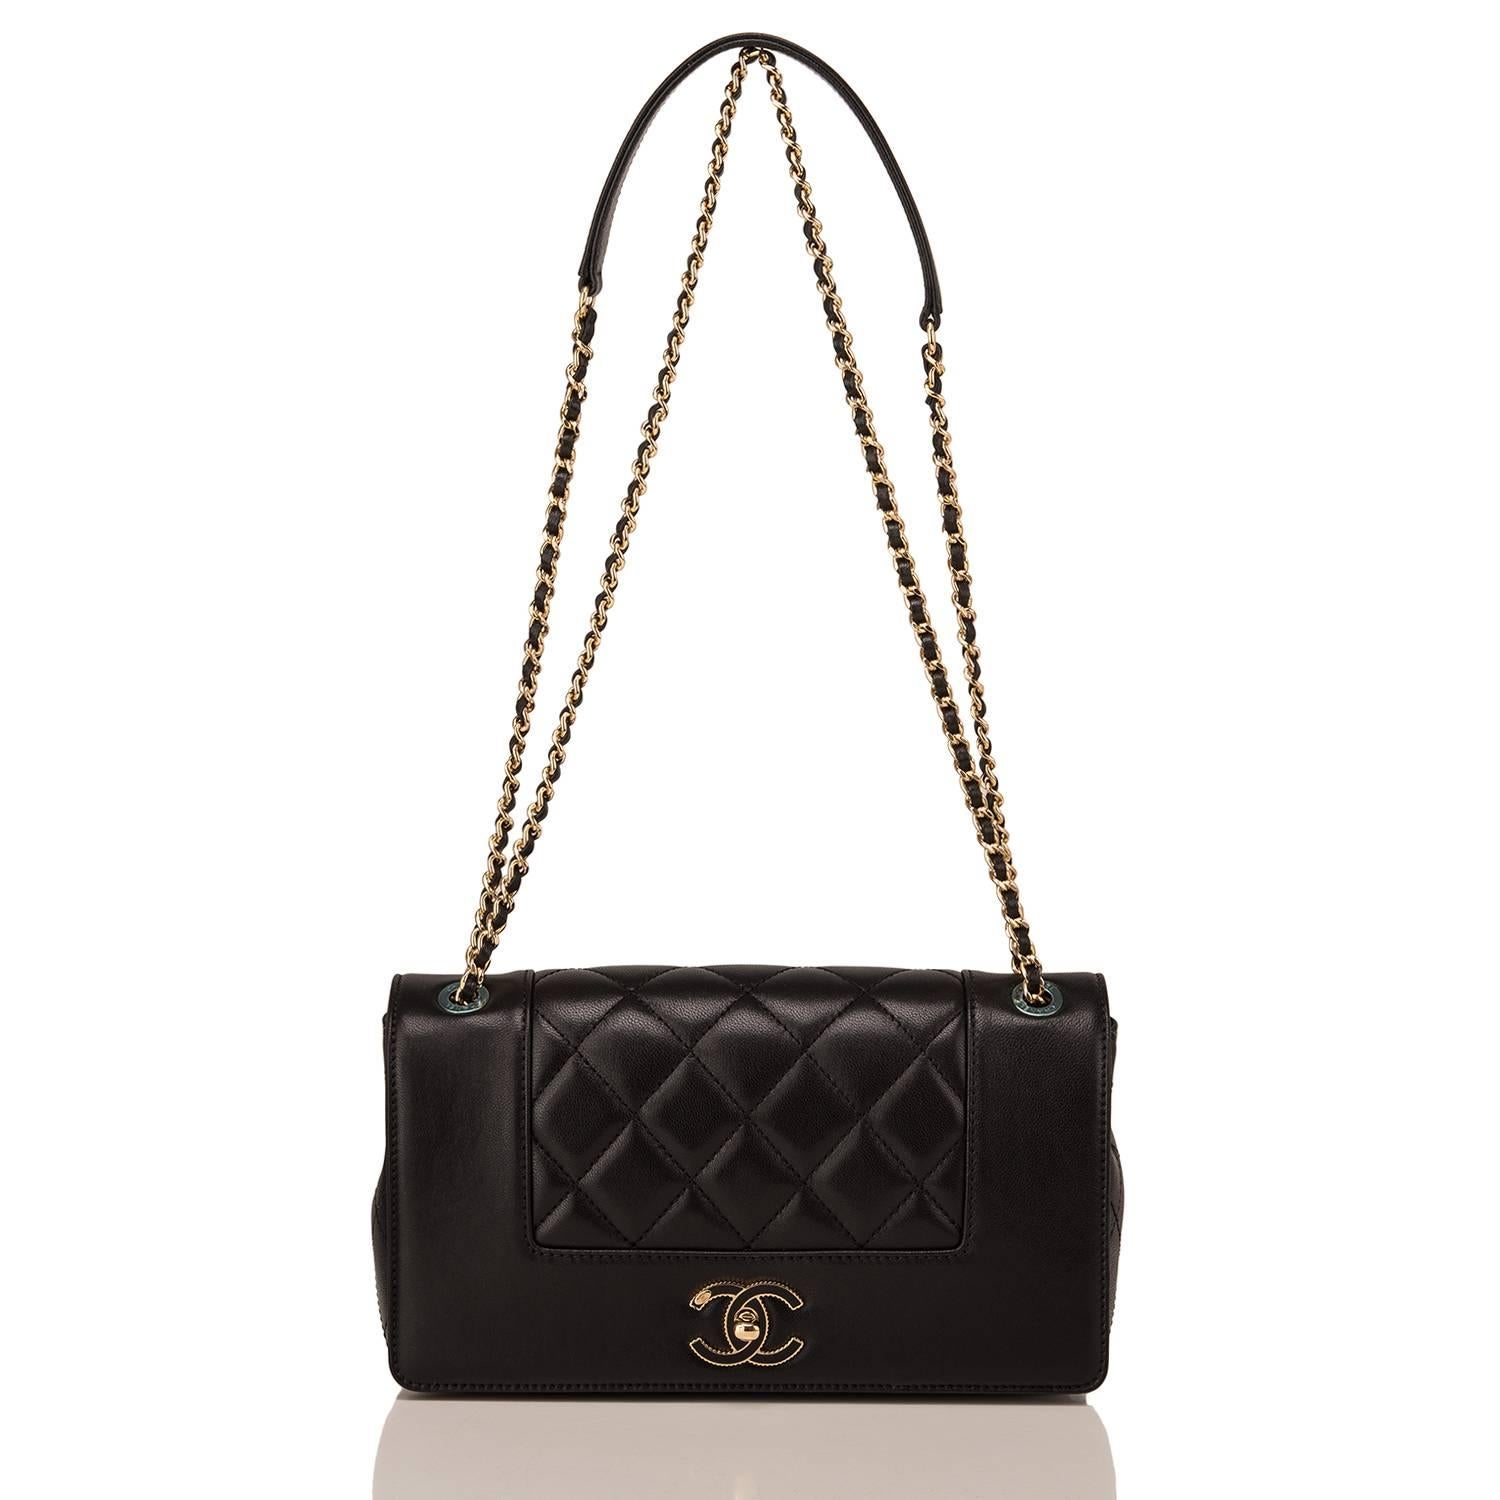 Chanel Paris In Rome Black Sheepskin Flap Bag 1